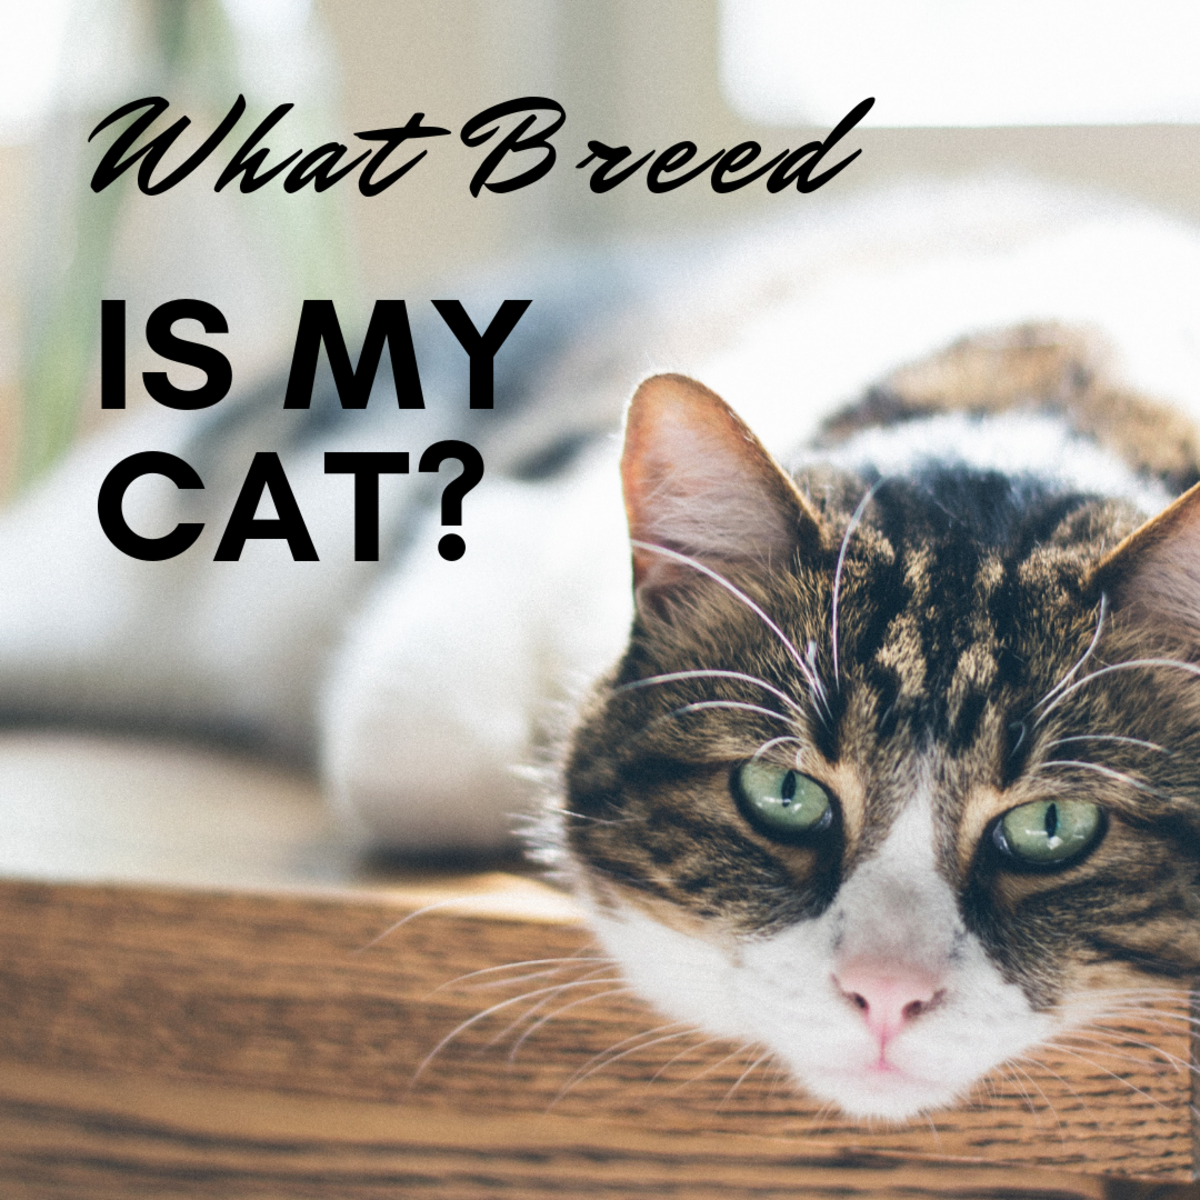 identifying cat breeds